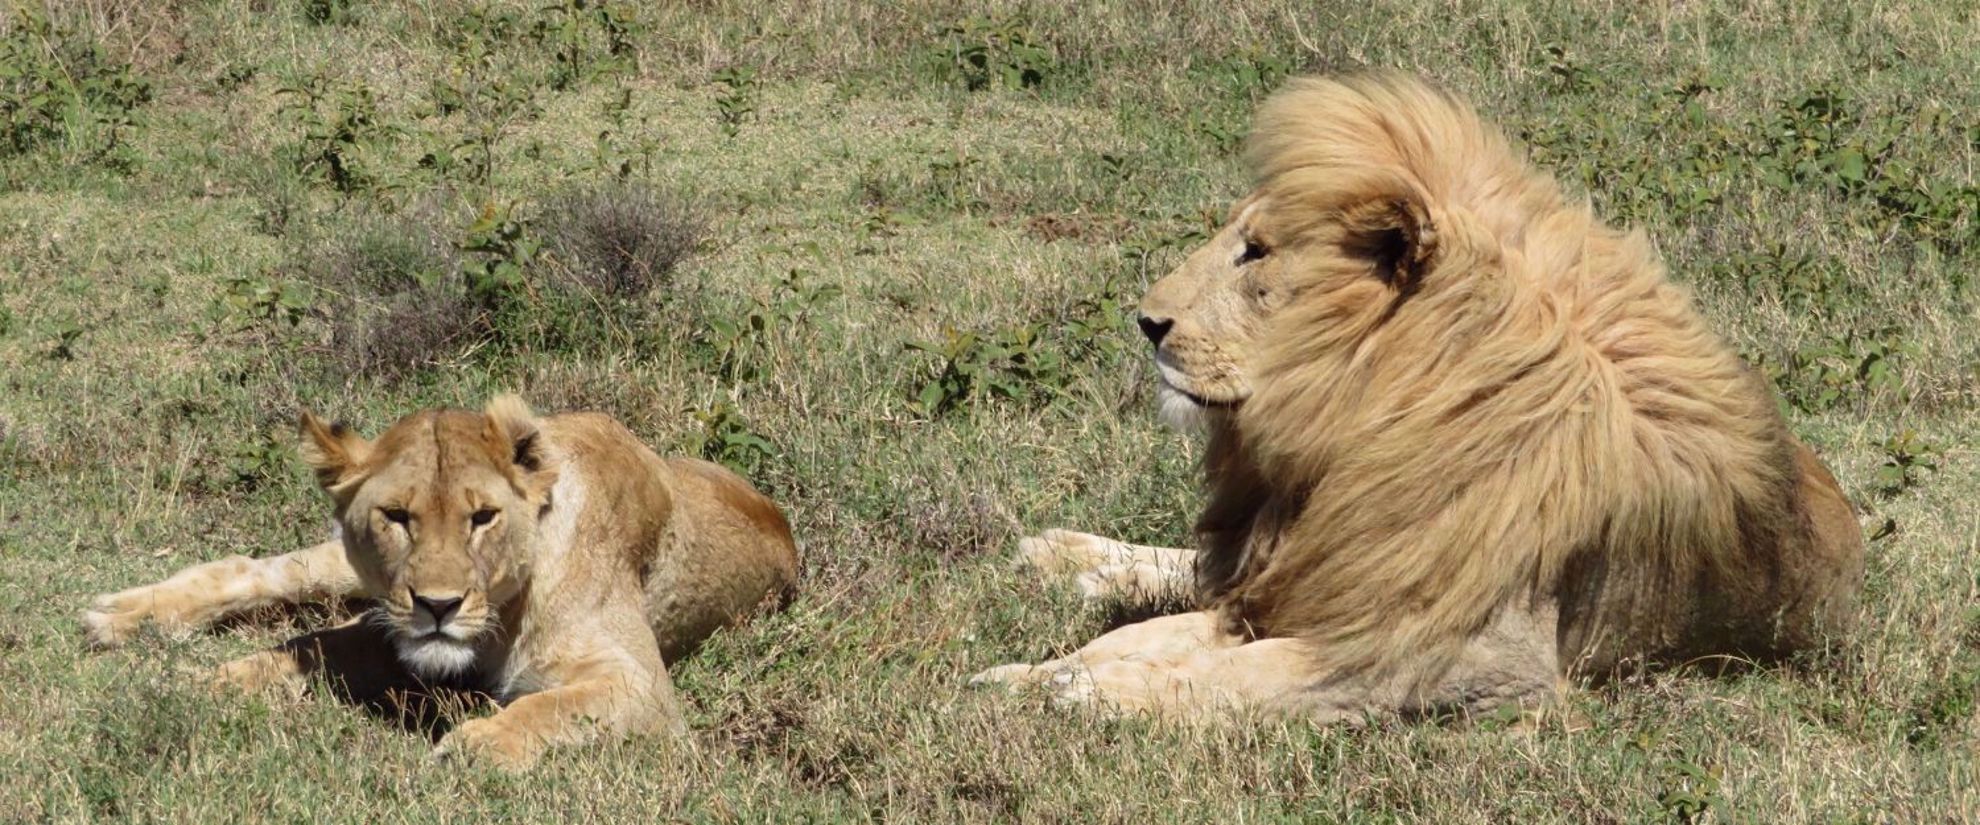 Lions in Tanzania 